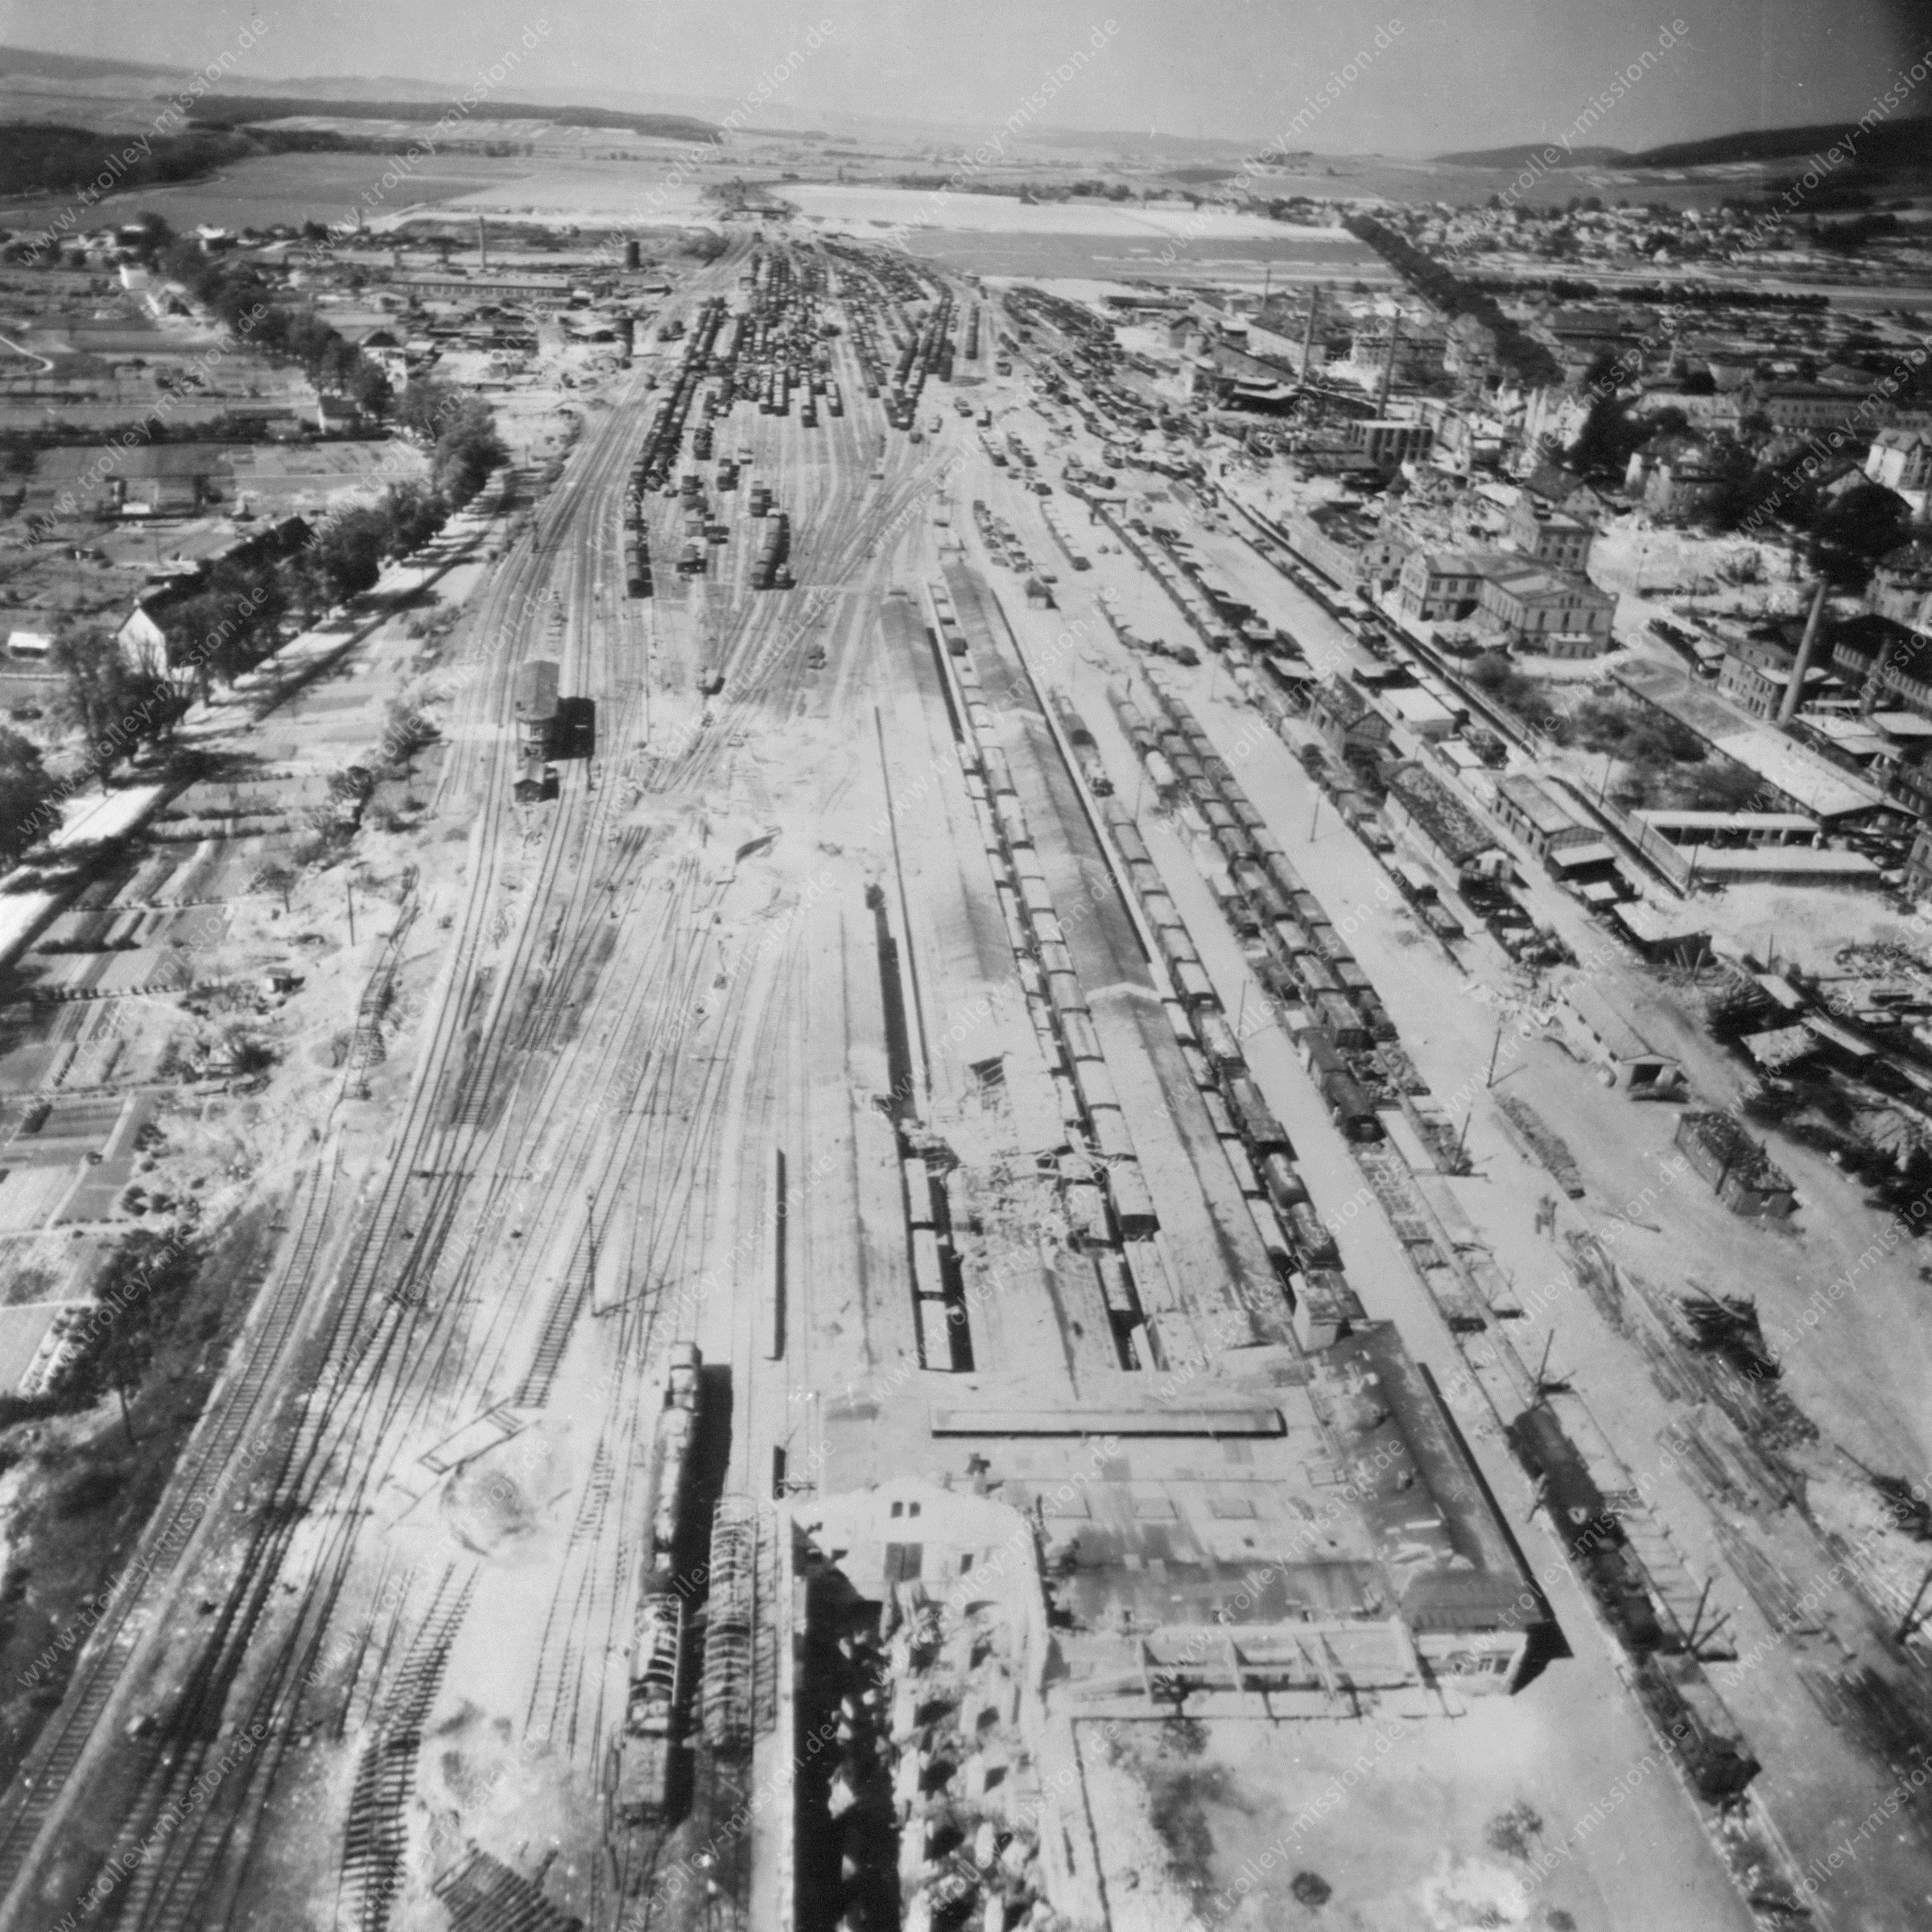 Rangierbahnhof und Güterbahnhof Göttingen - Luftbild 1945